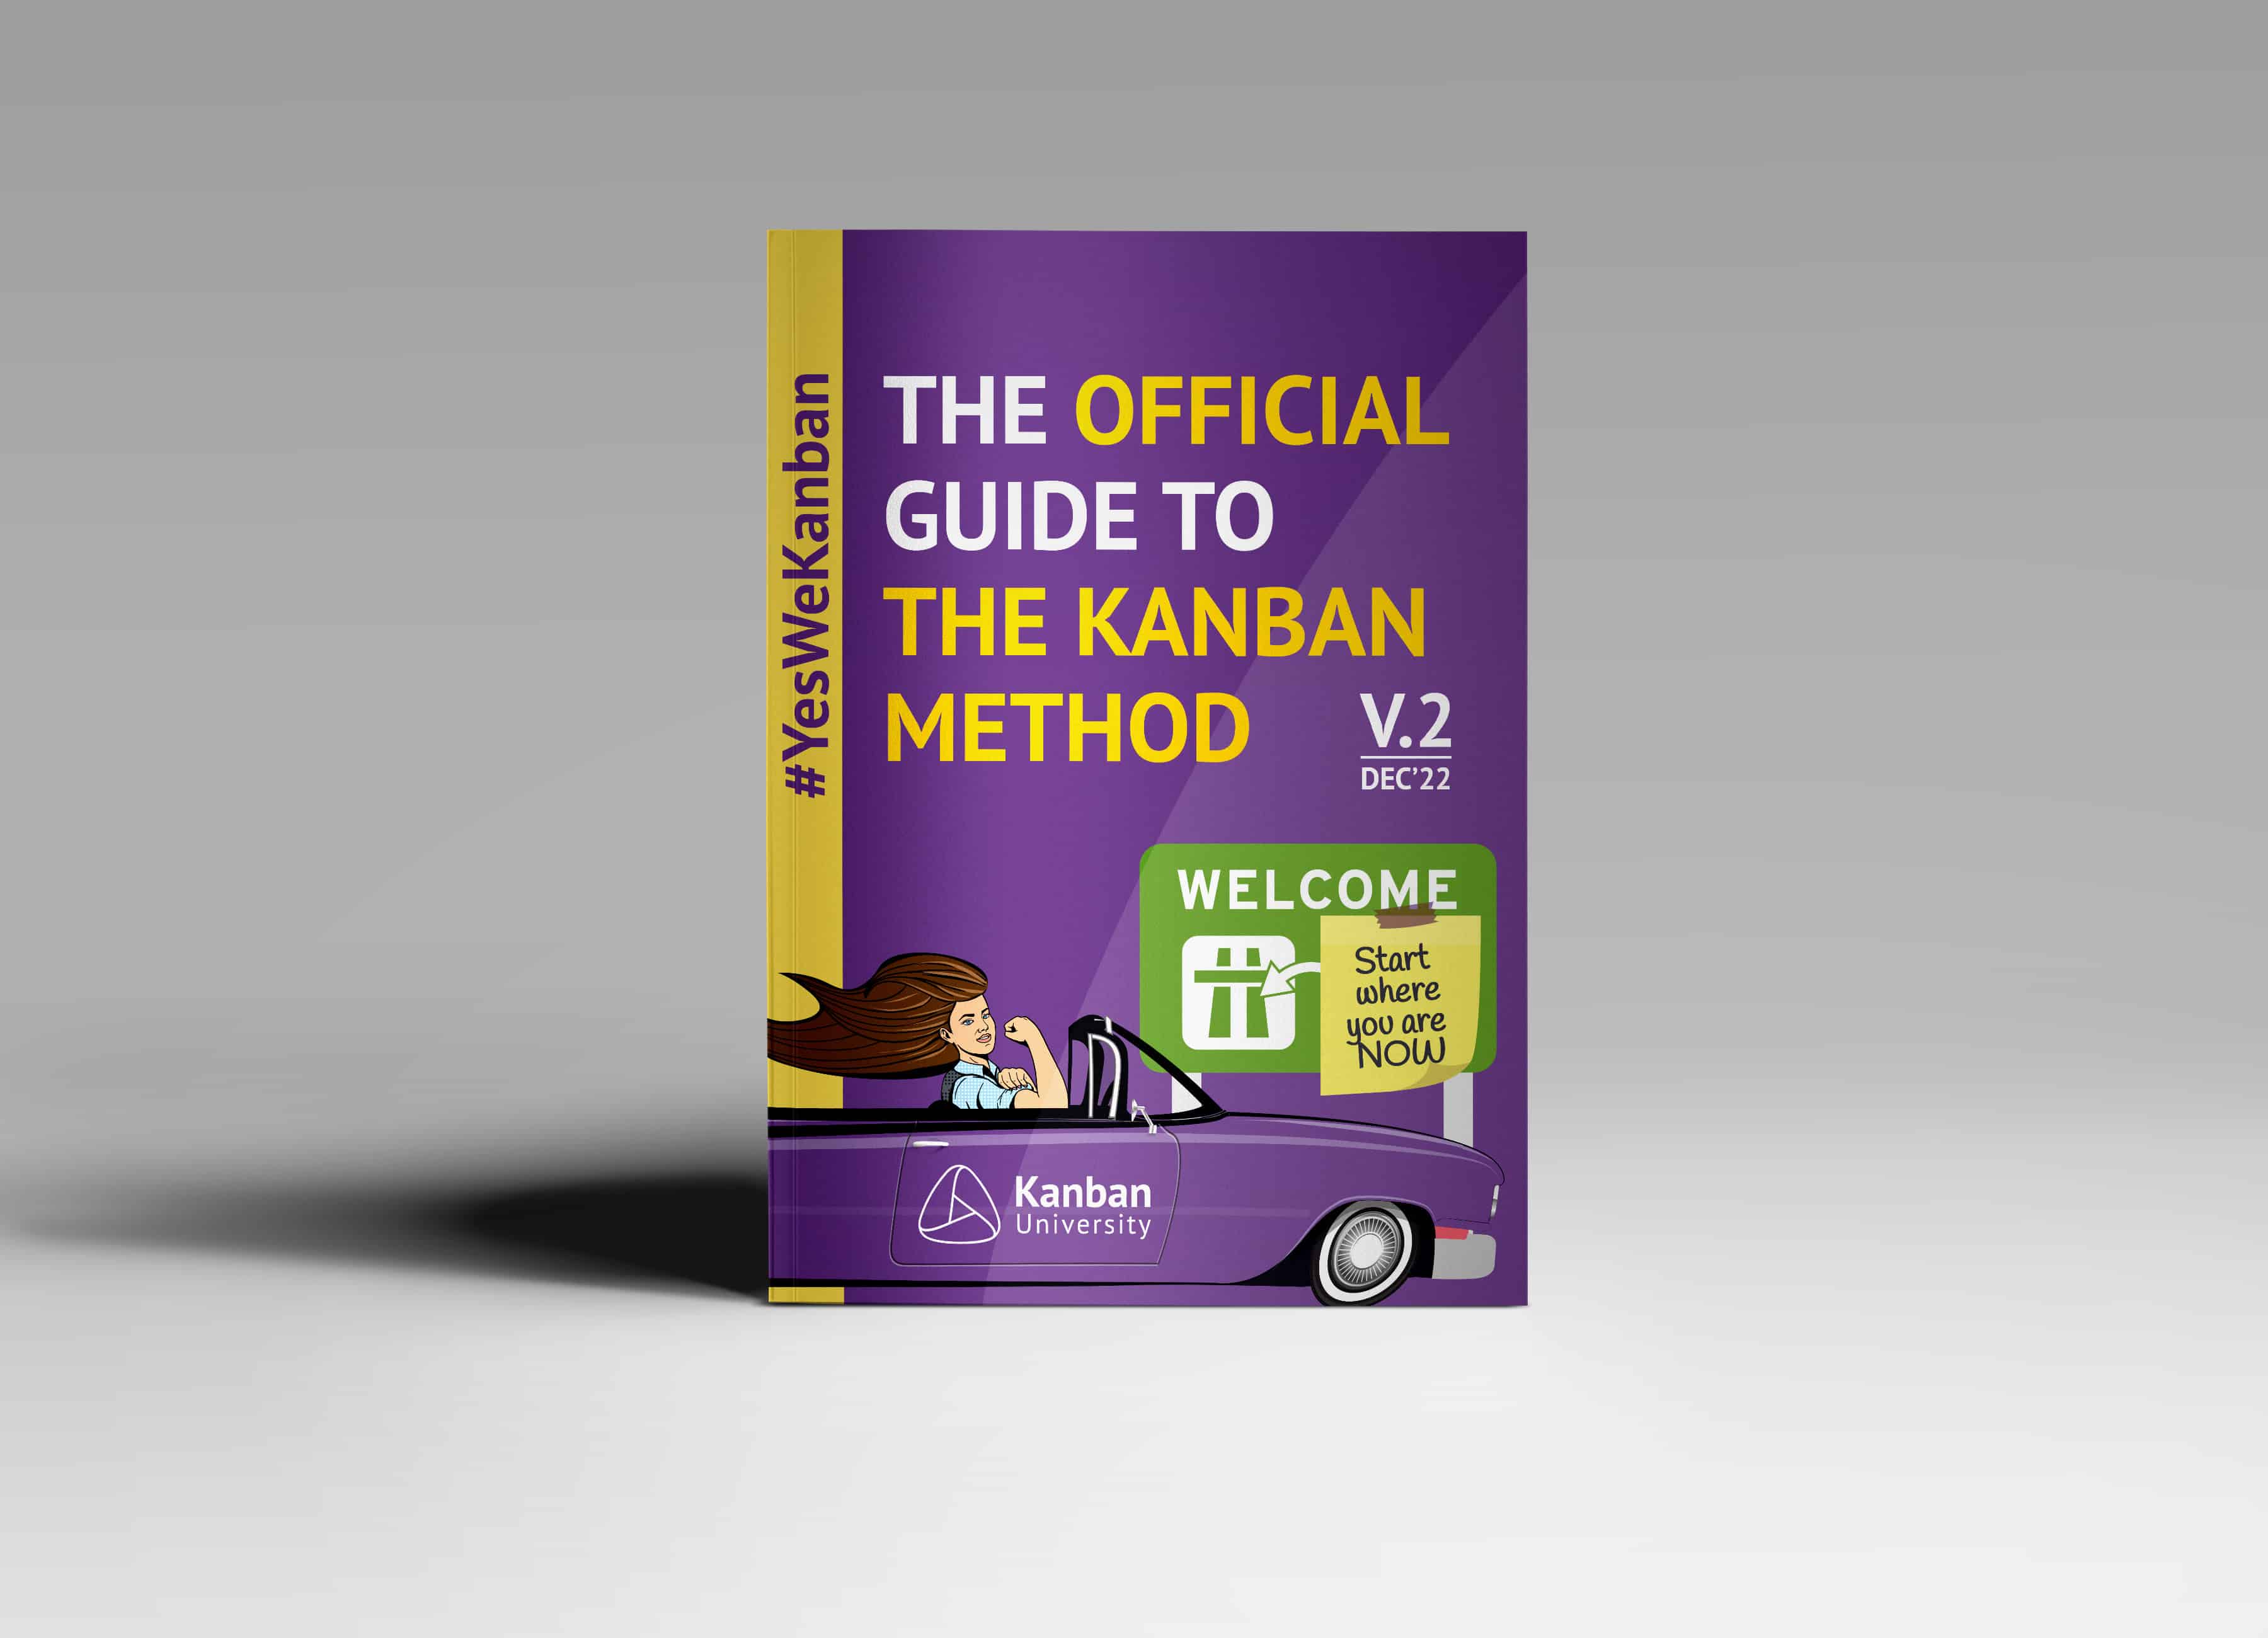 The Official Kanban Guide V2 by Kanban University